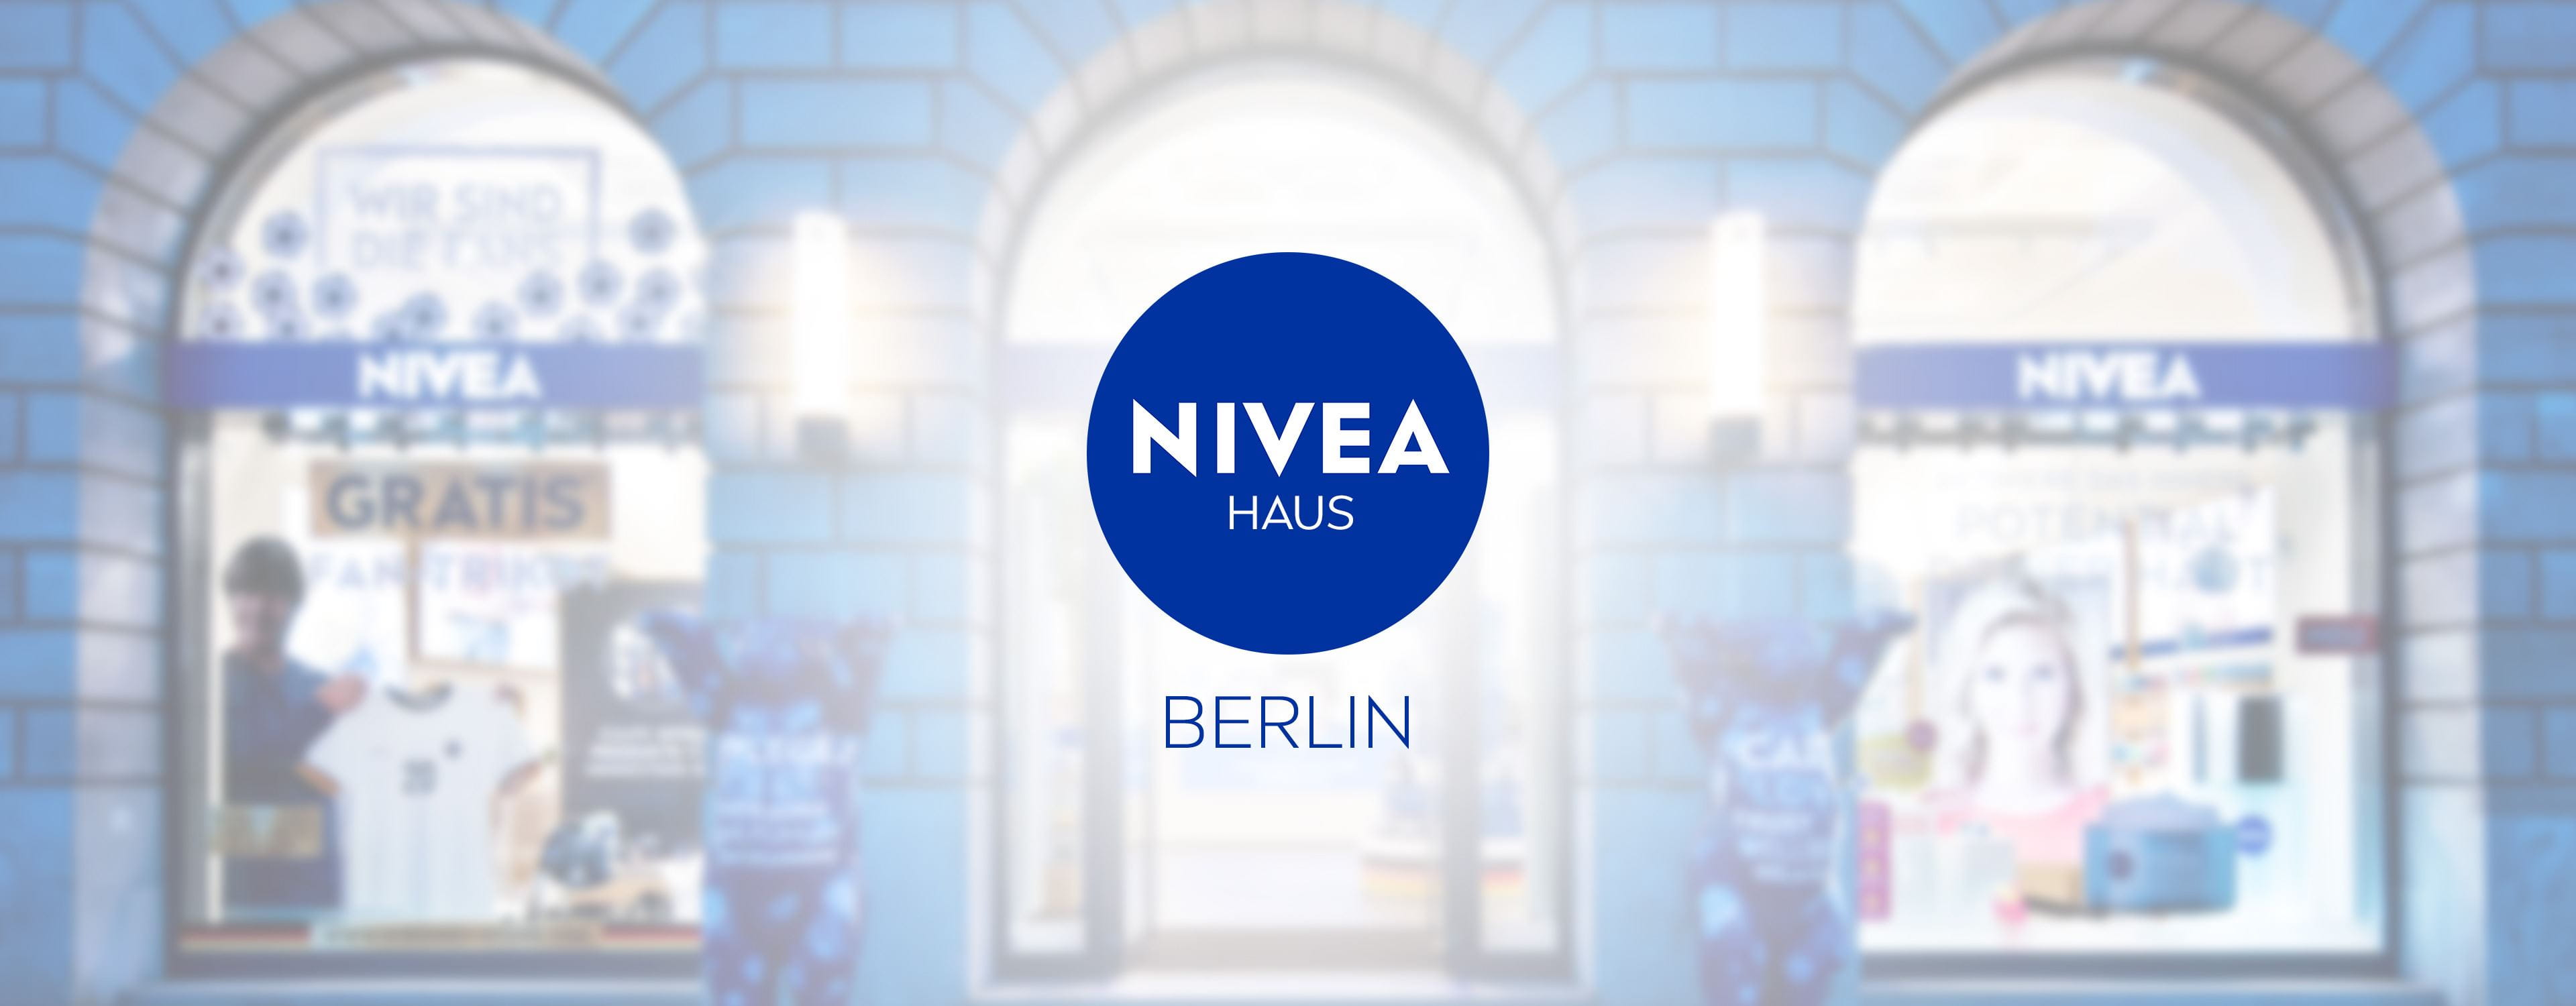 NIVEA Haus Standort Berlin Keyvisual Desktop